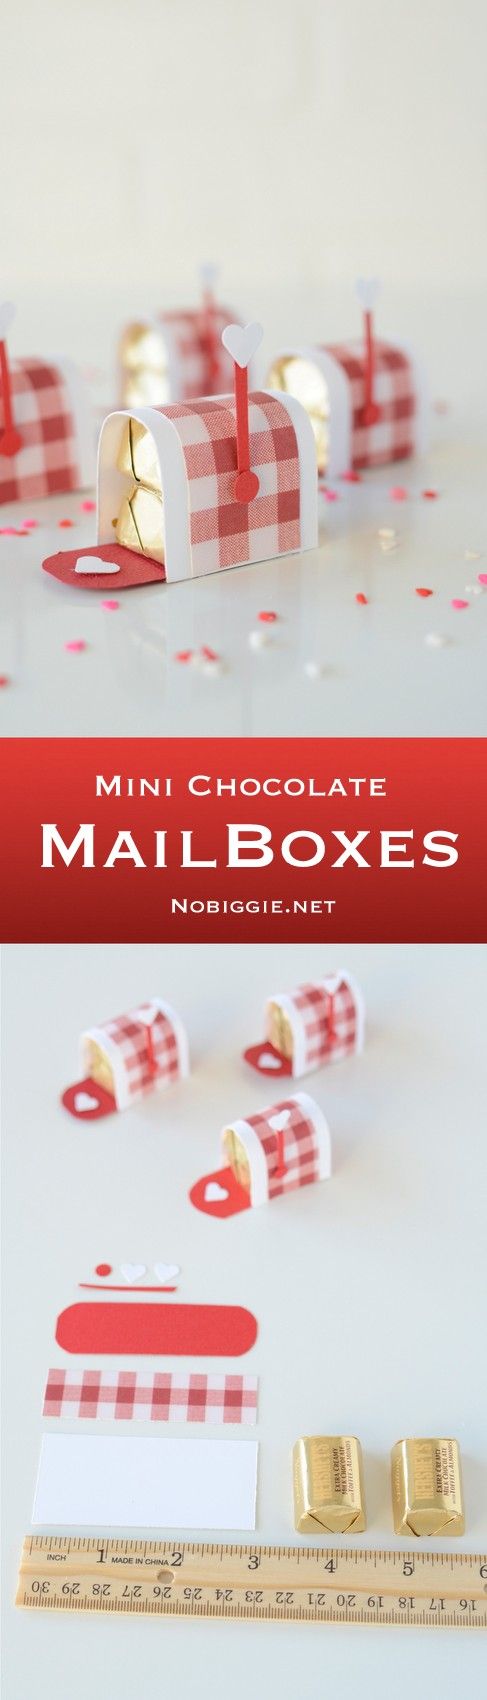 Wedding - Mini Chocolate Mailboxes